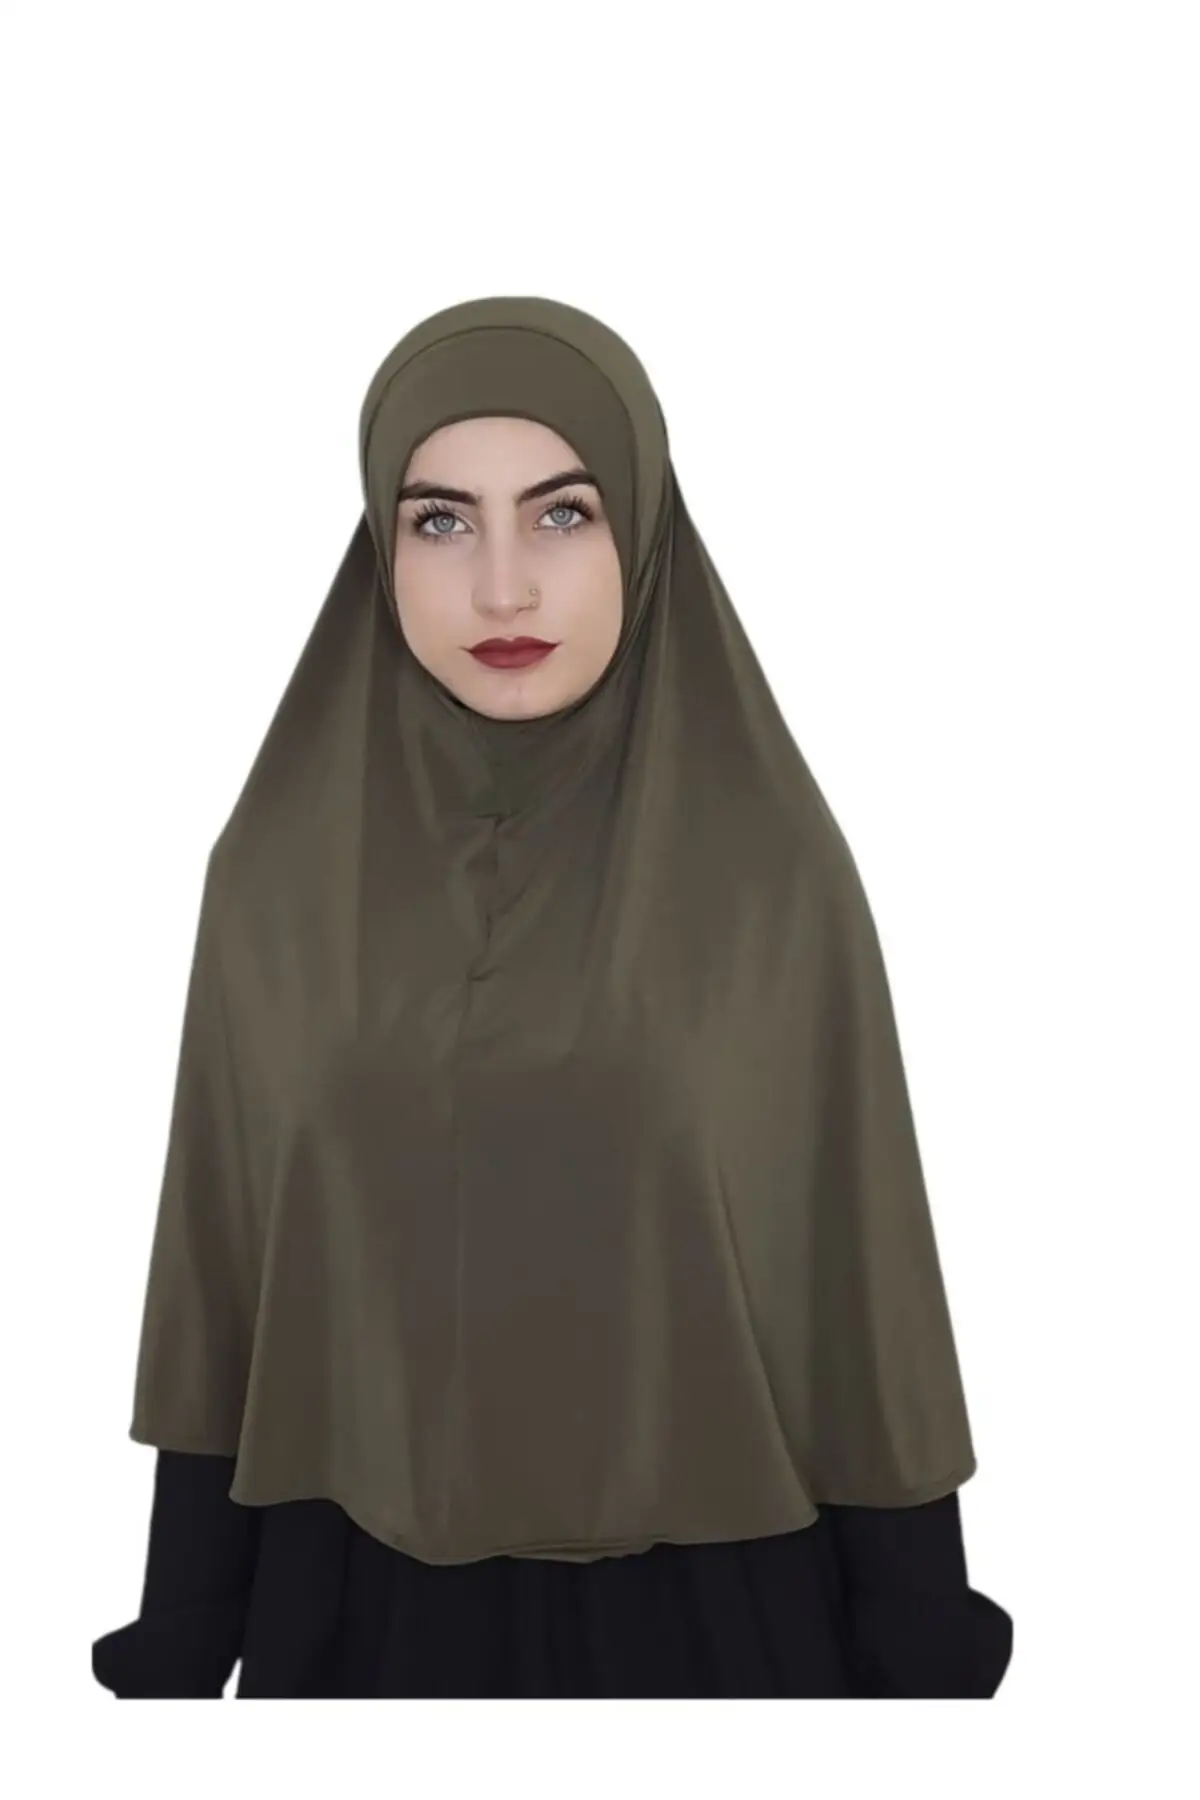 

Single Parca Practical Big Ready Esarp Hijap Khaki Green Prayer Cover Size Hijap Bone Beach Clothing